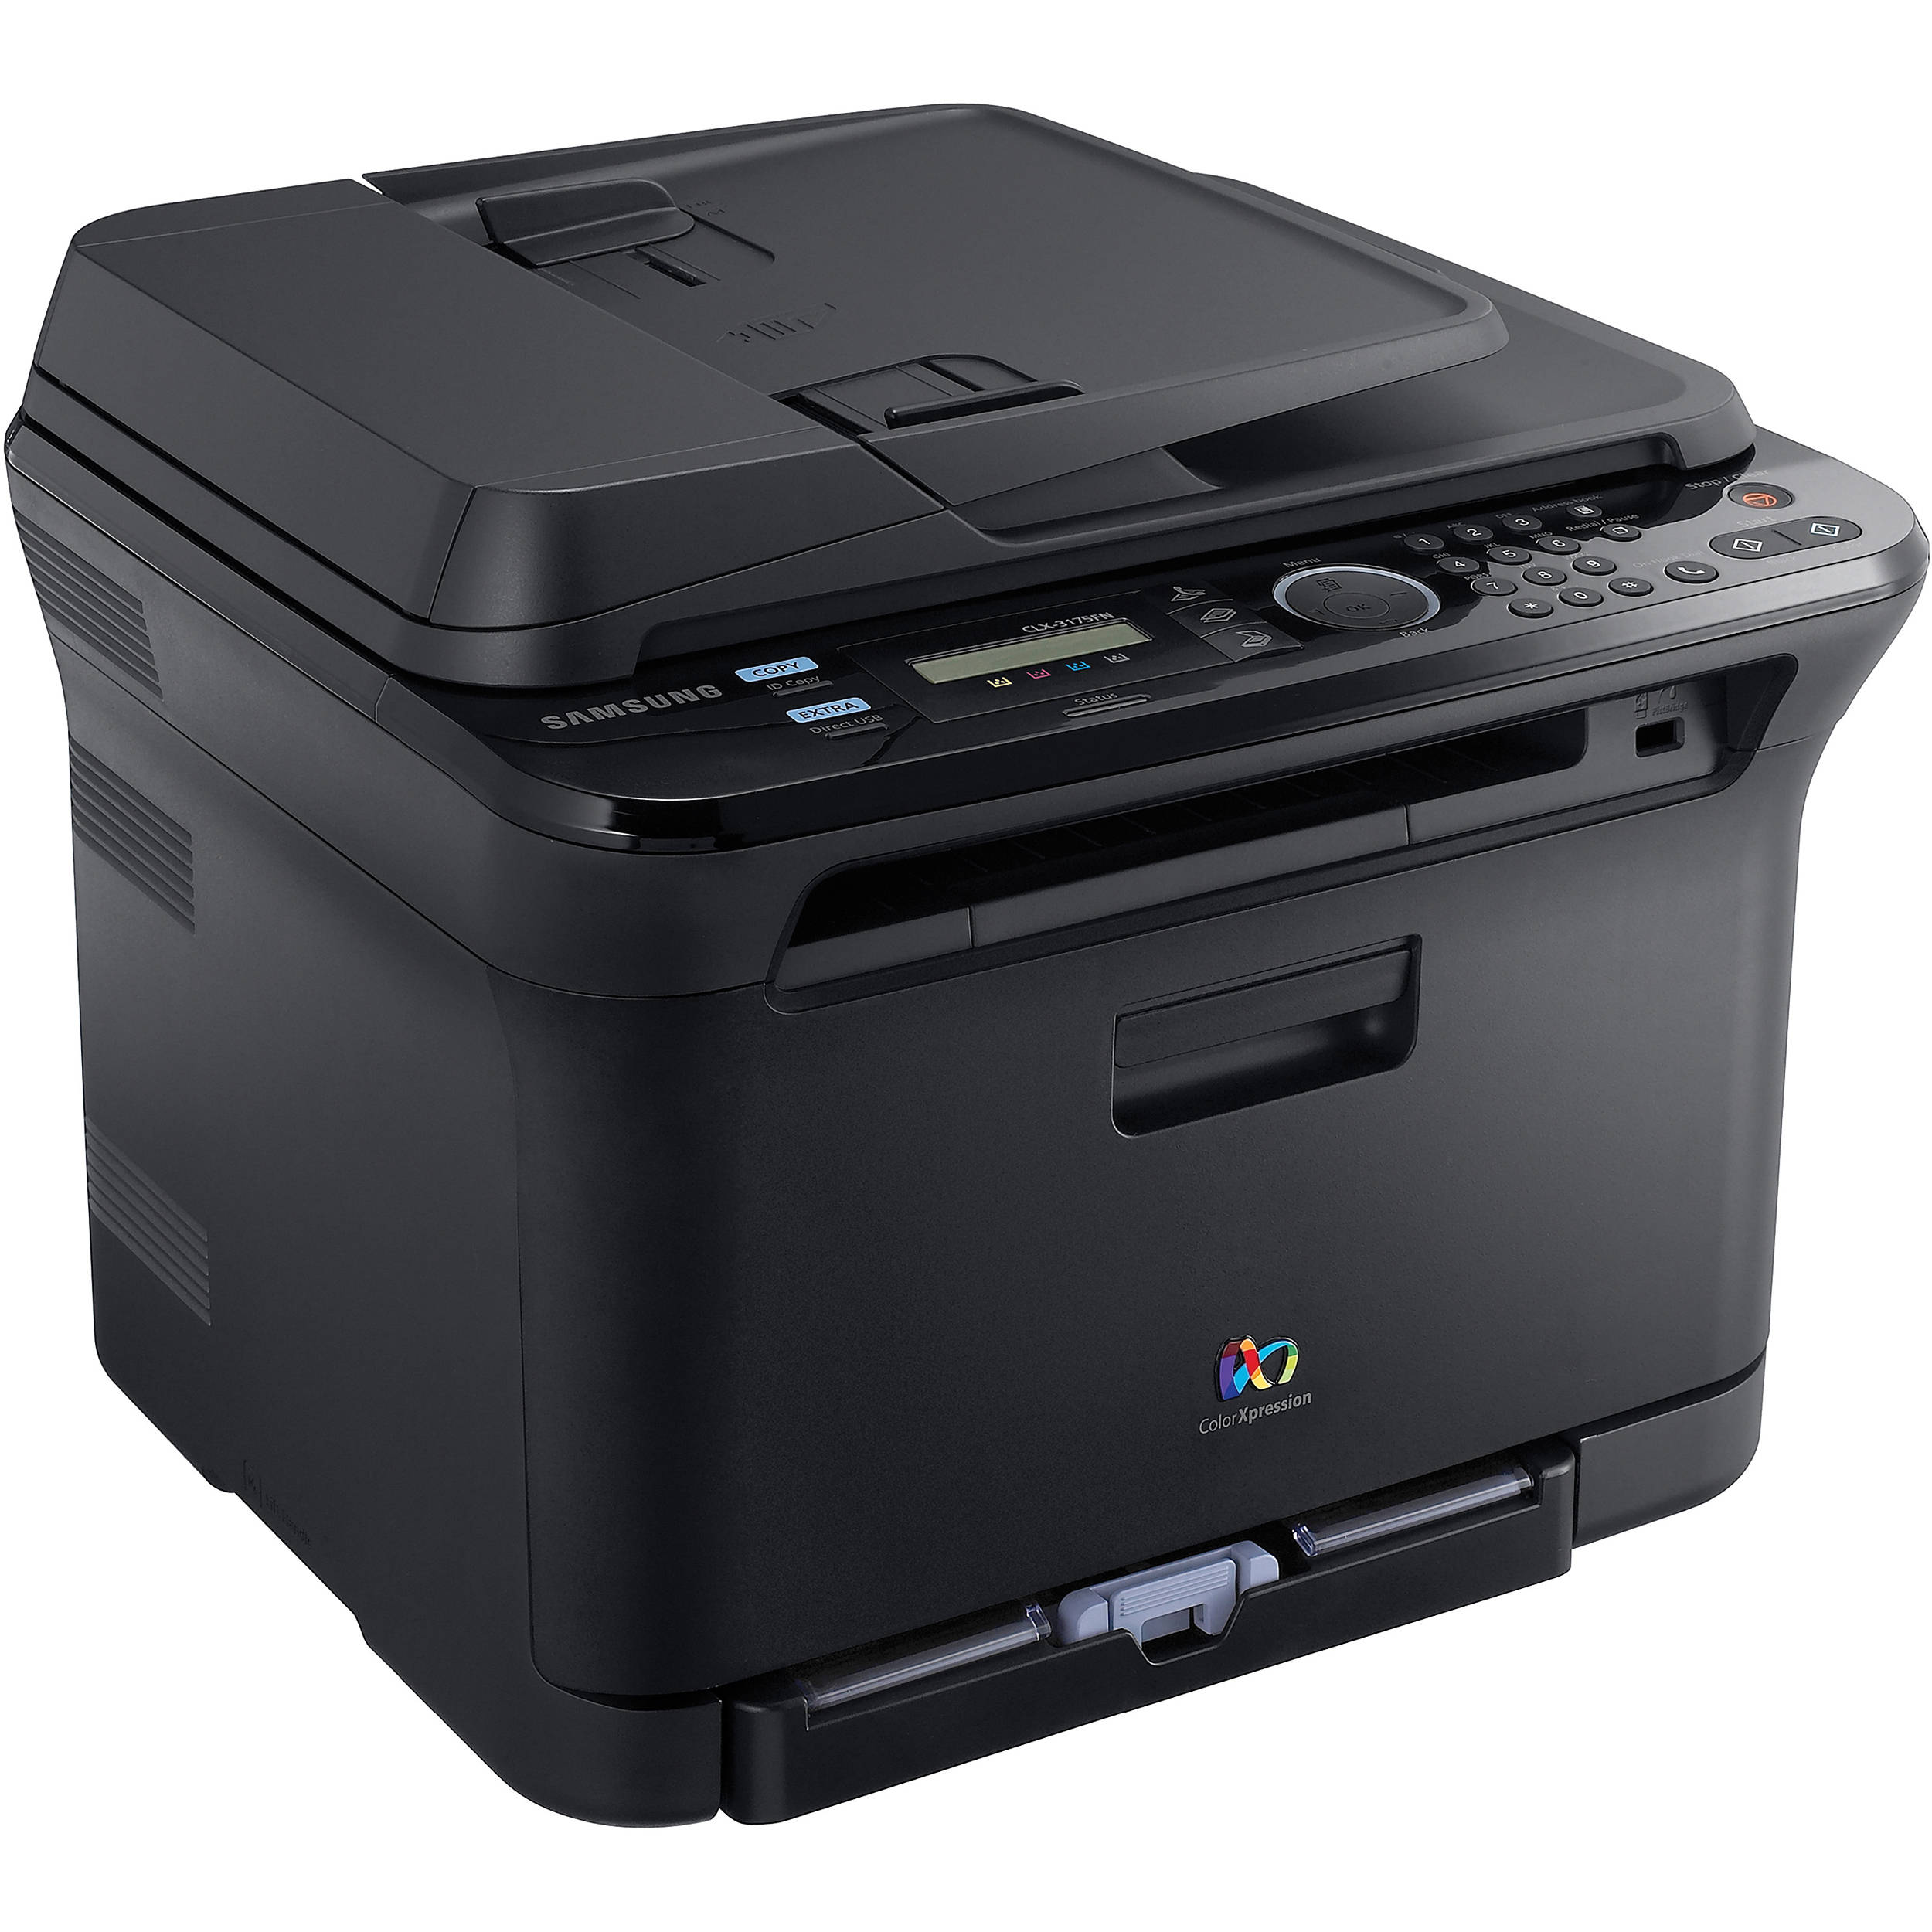 Samsung CLX-3175N Multi-function Color Laser Printer